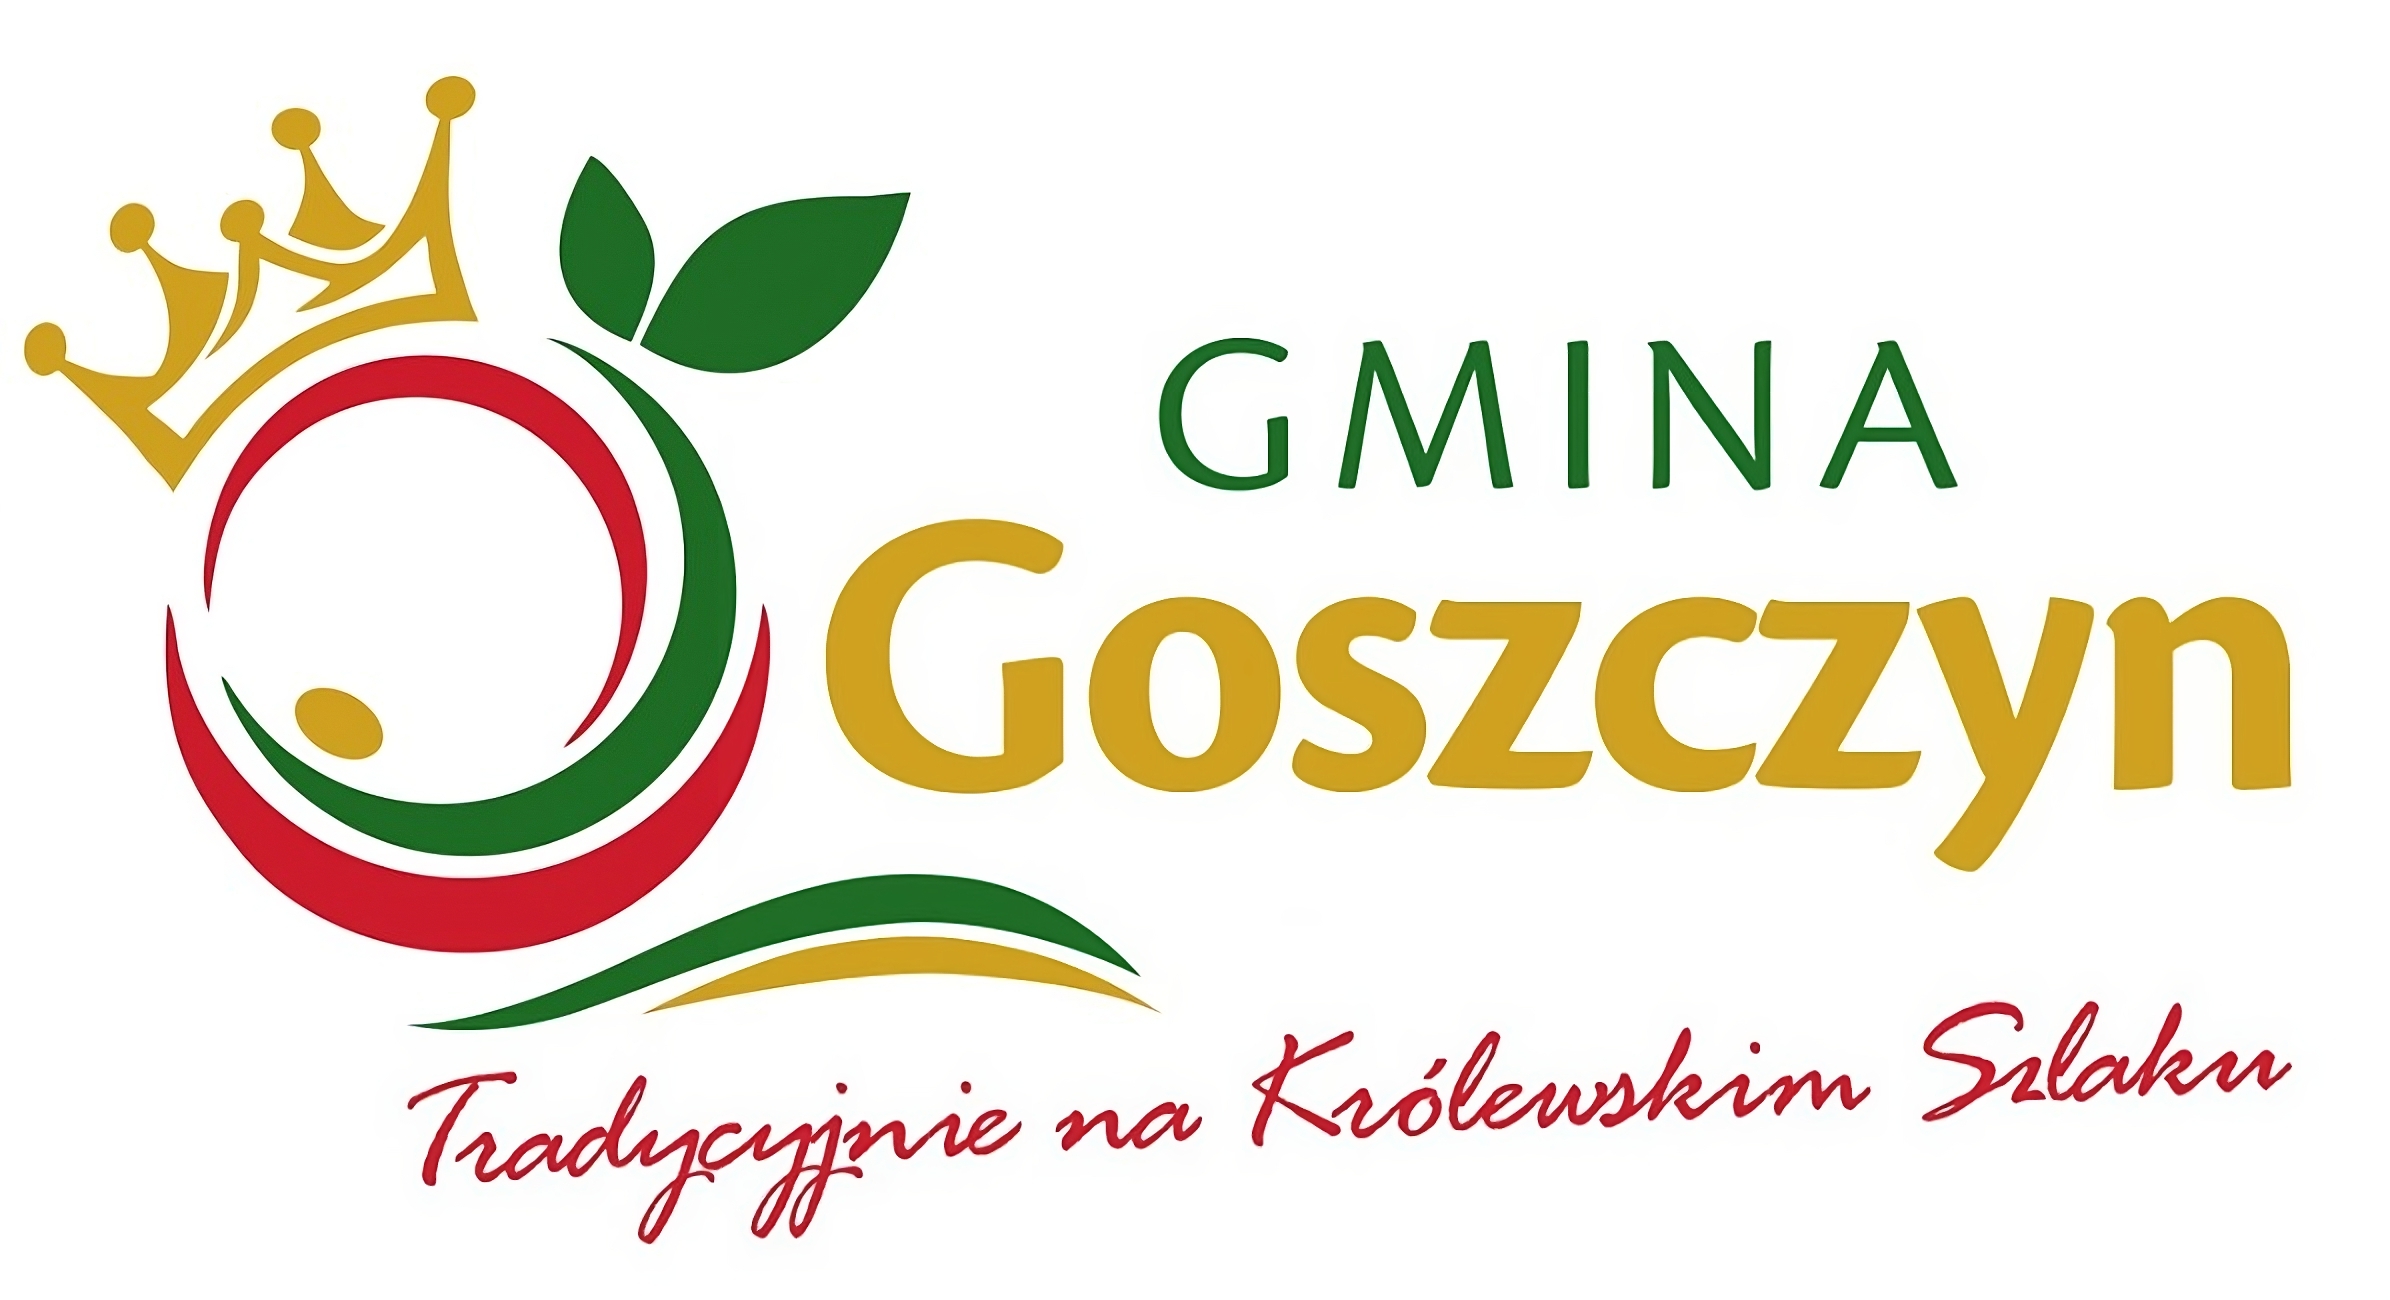 logo_gmina_goszczyn-transformed.jpeg (703 KB)